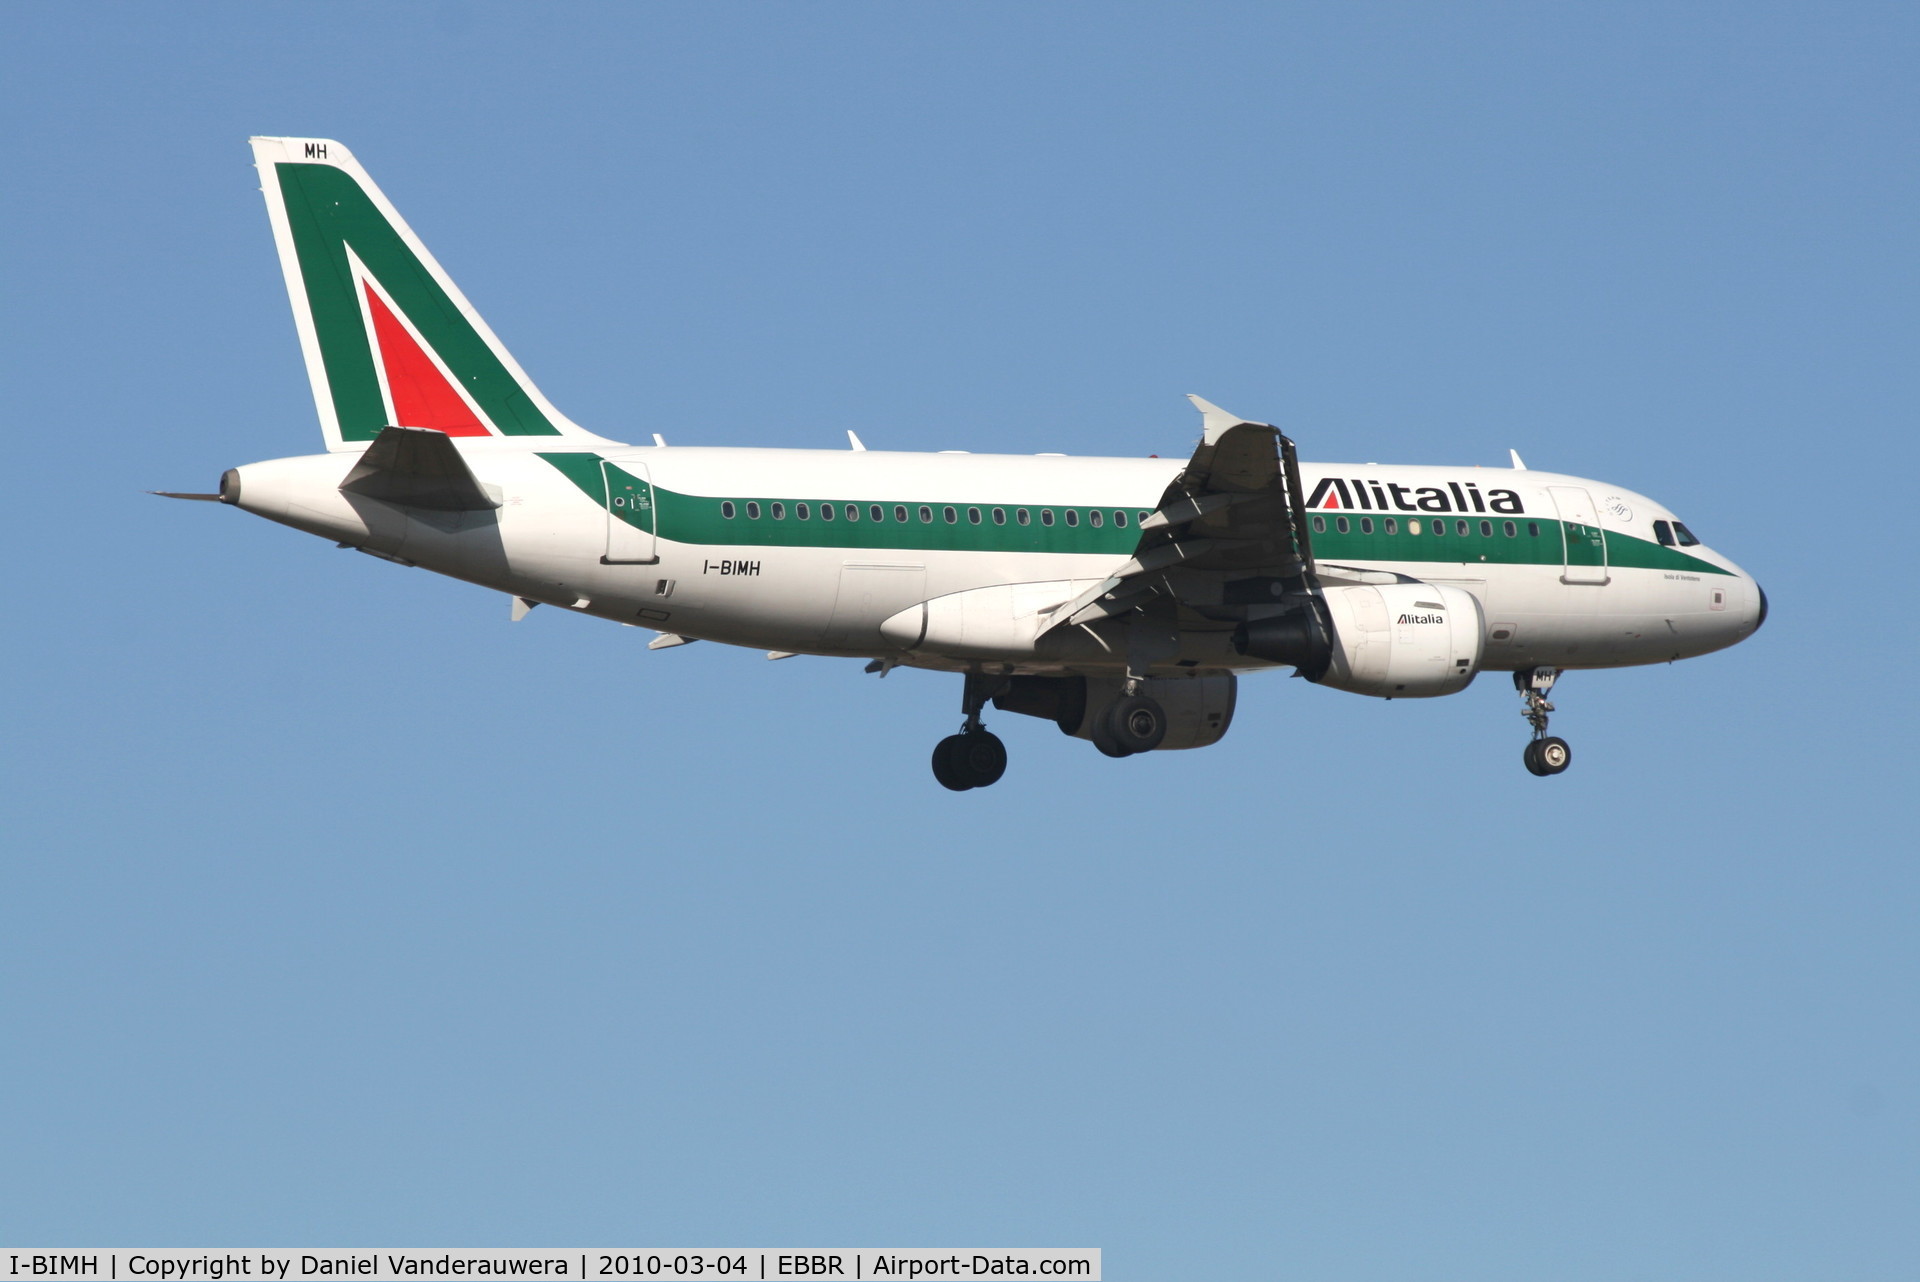 I-BIMH, 2003 Airbus A319-112 C/N 2101, Flight XM5984 is descending to RWY 02